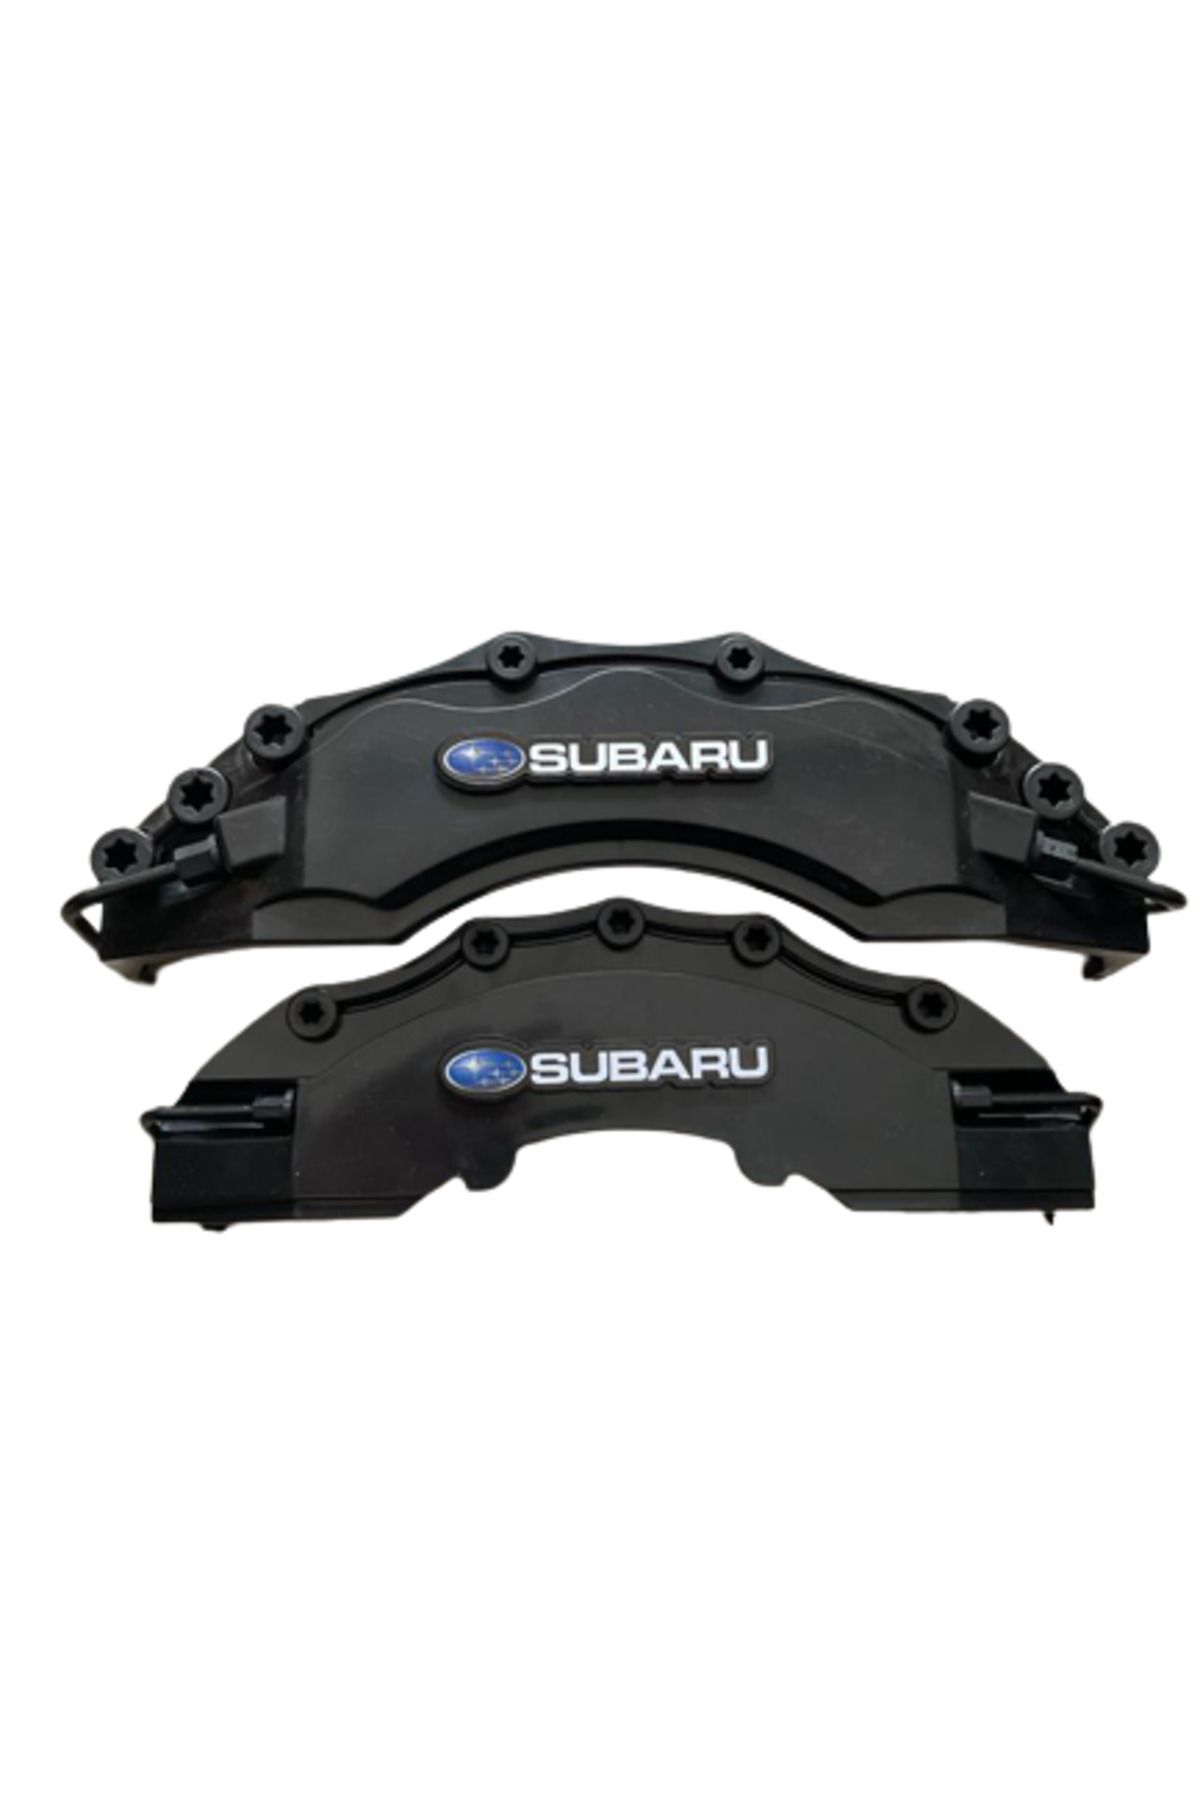 KAISER Subaru Kaliper Kapağı 4 Adet Siyah